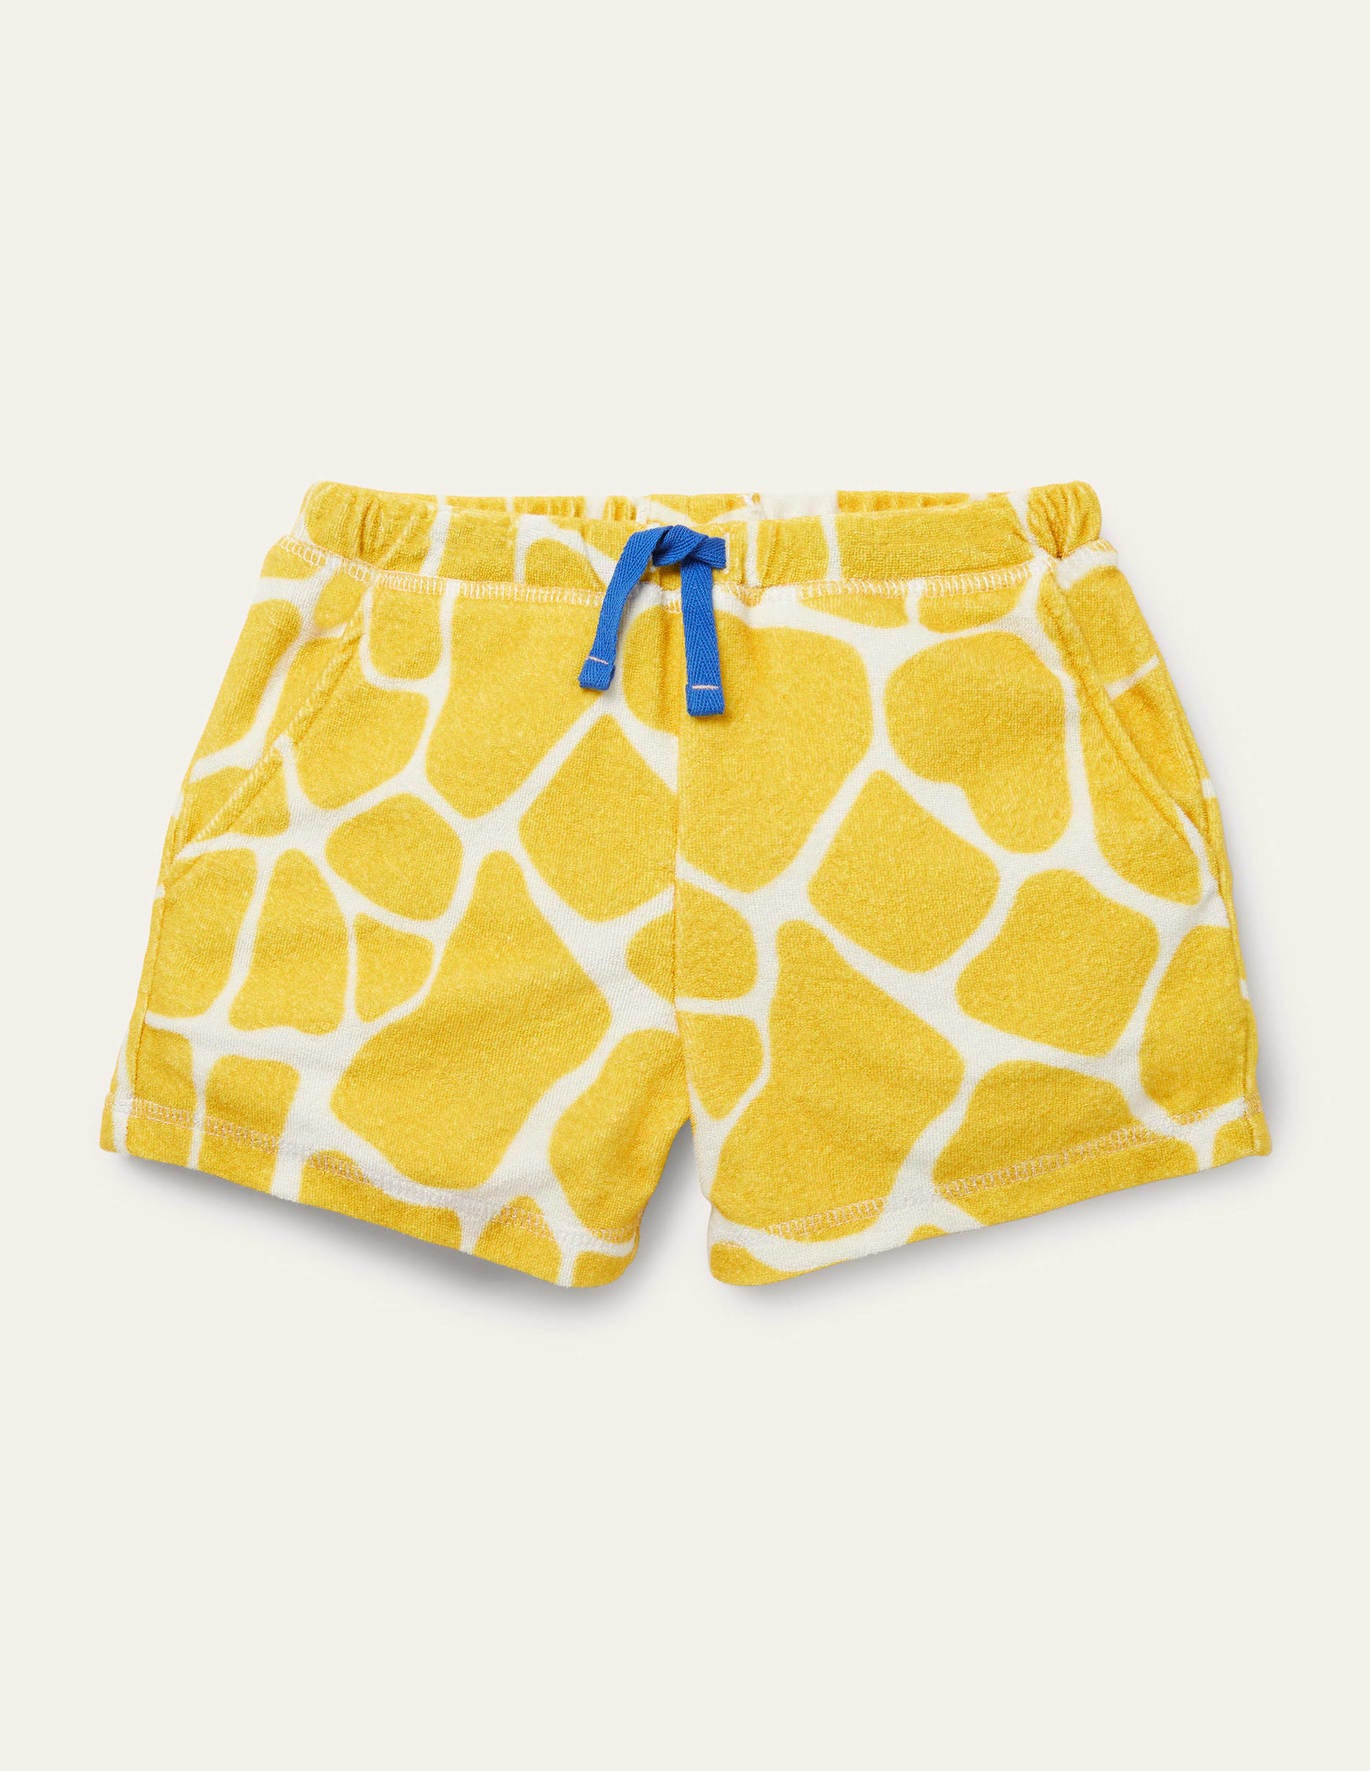 Boden Towelling Shorts - Daffodil Yellow Giraffe